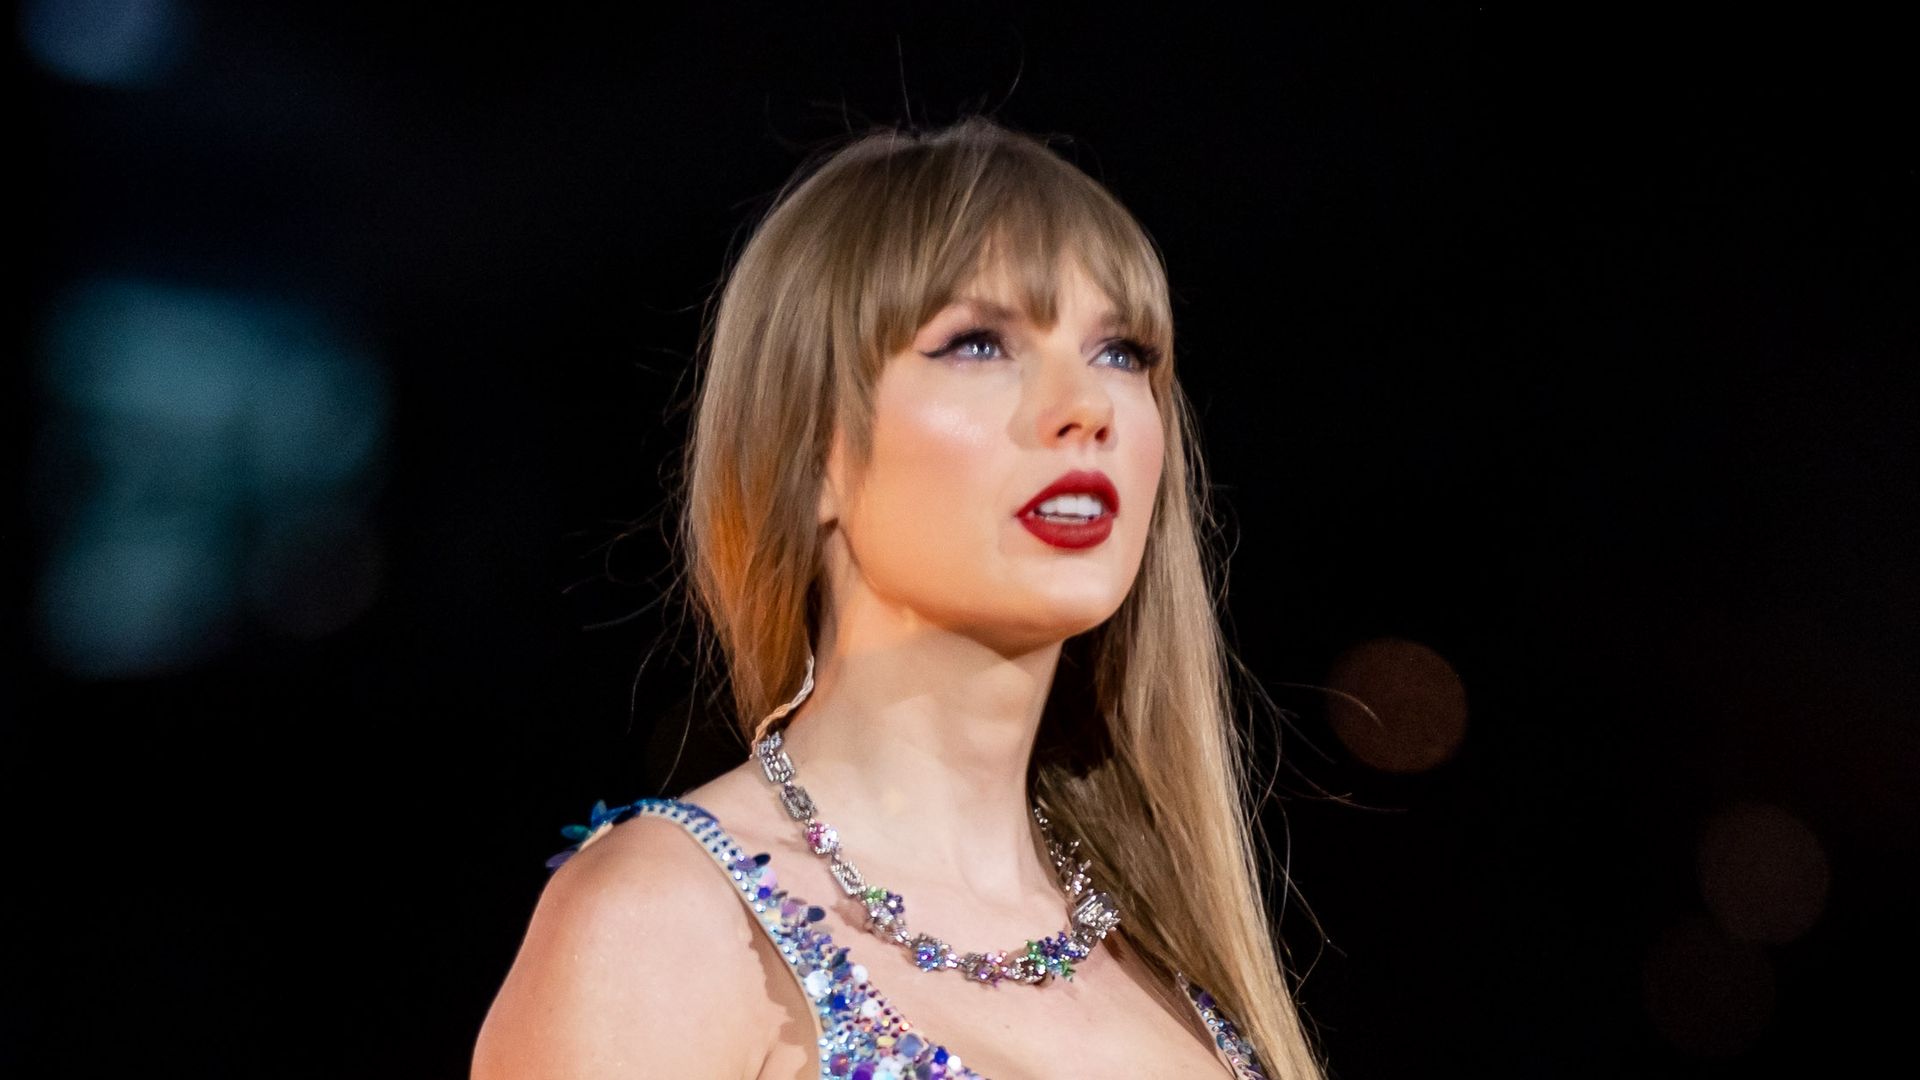 Taylor Swift Speak Now album wallpaper 💜  Now albums, Taylor swift speak  now, Taylor swift